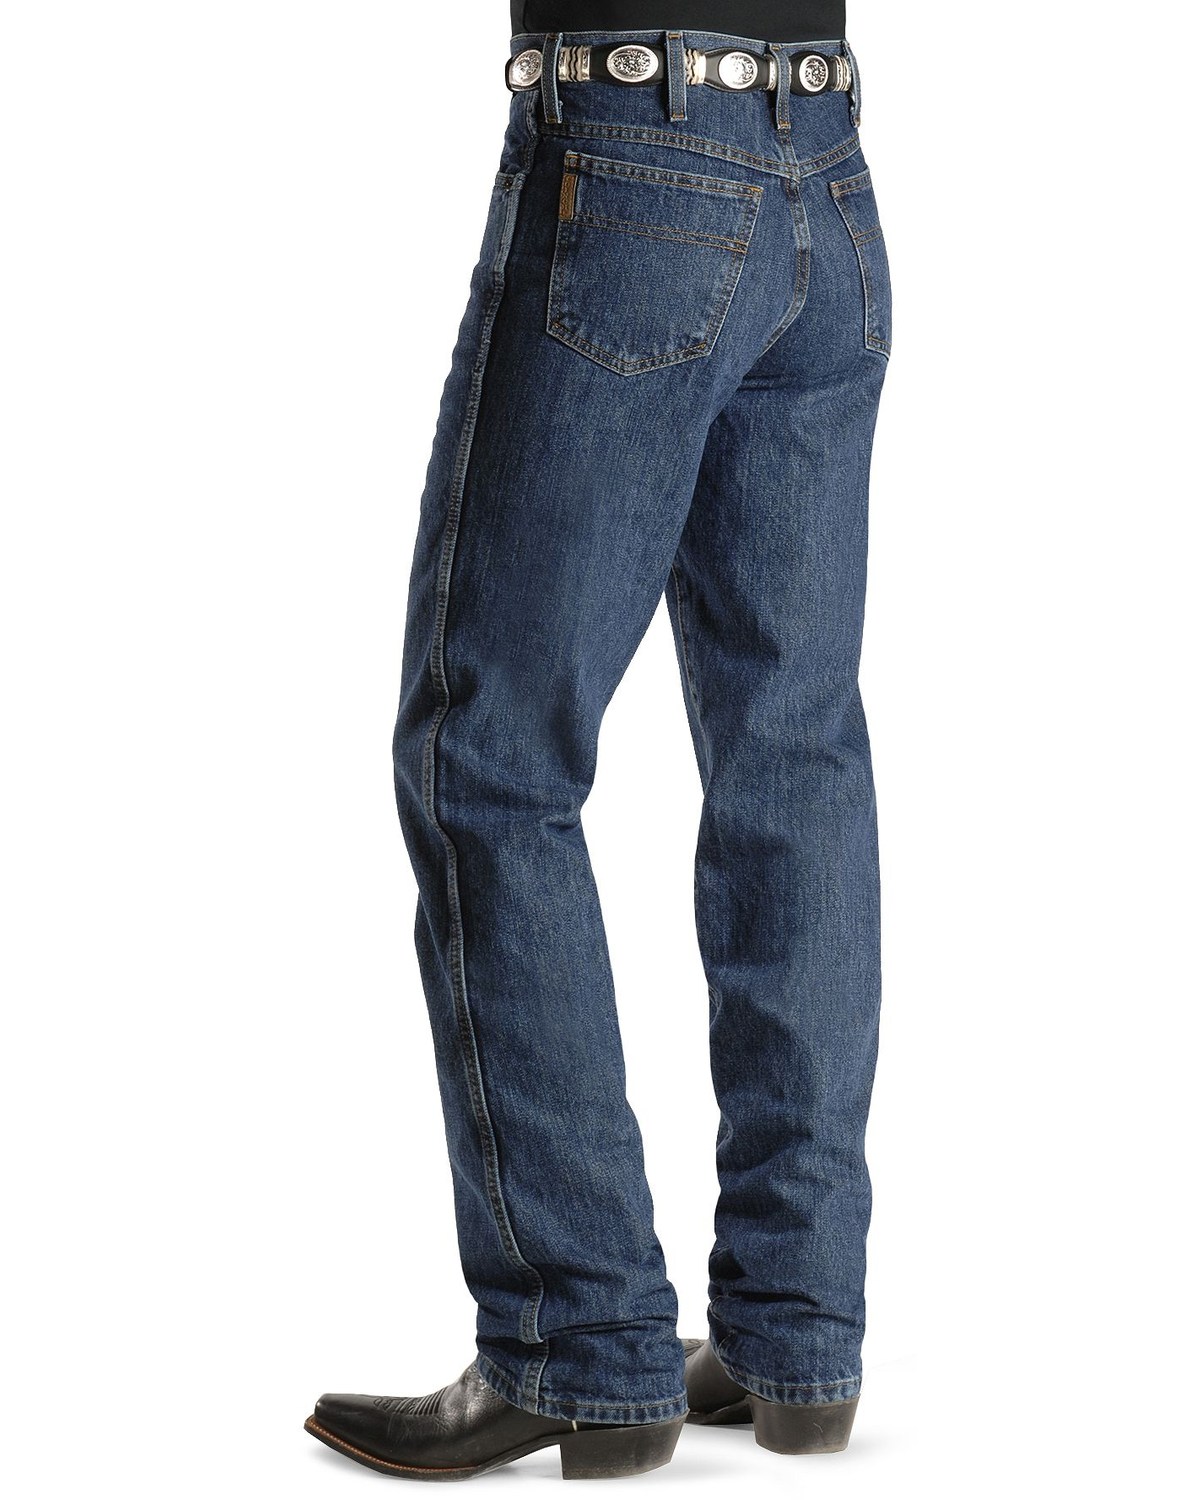 jeans pant myntra